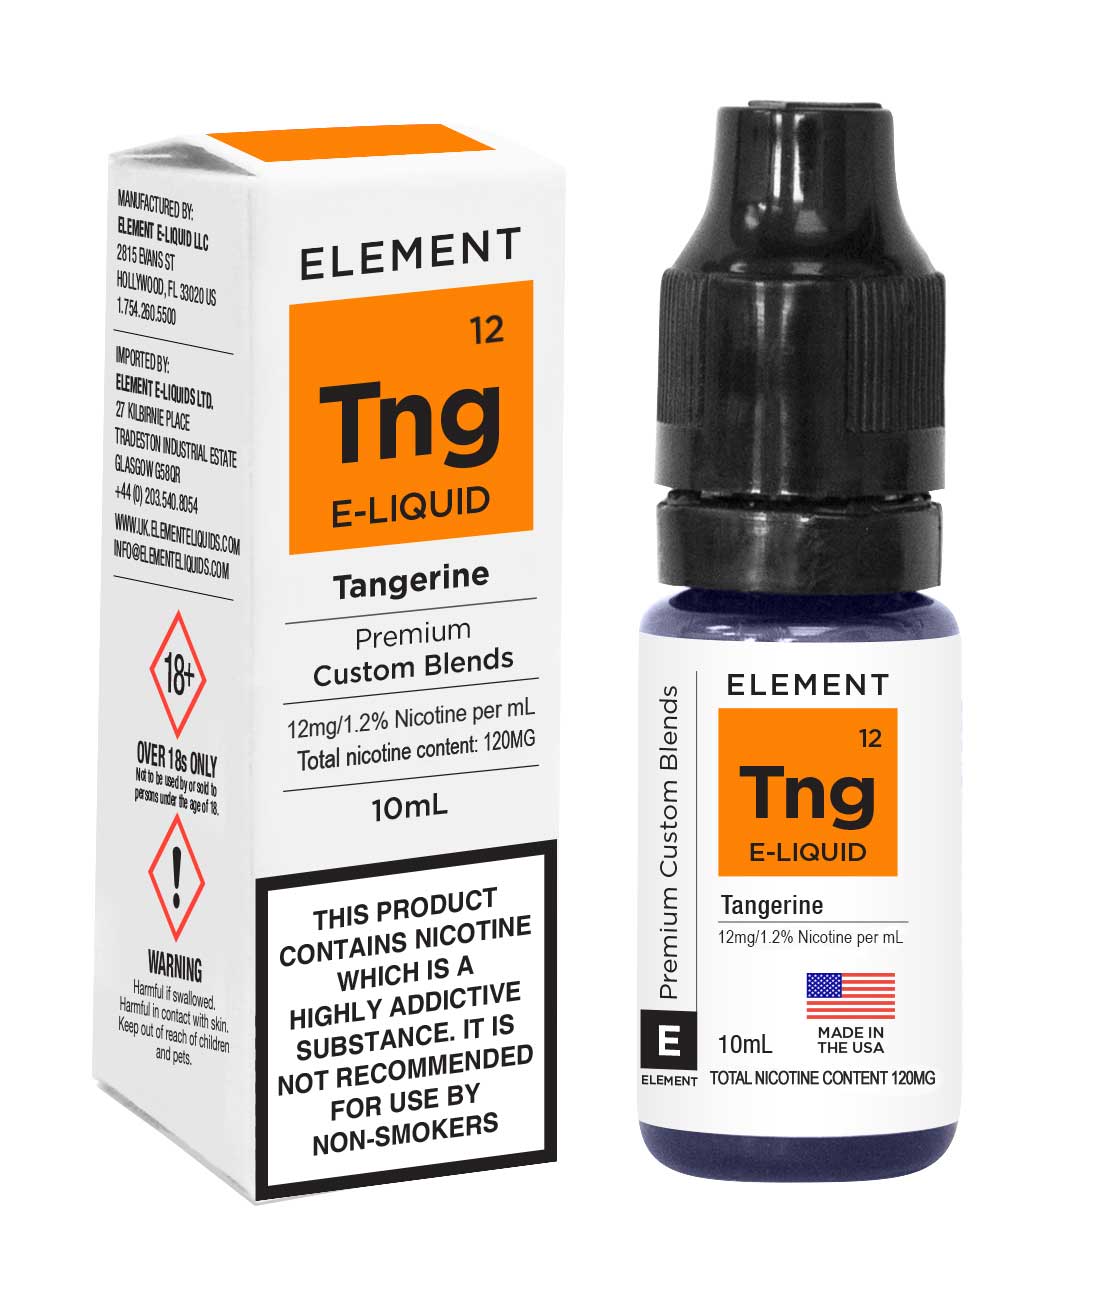 Element E-liquid Tangerine 10ml - 12mg Nicotine